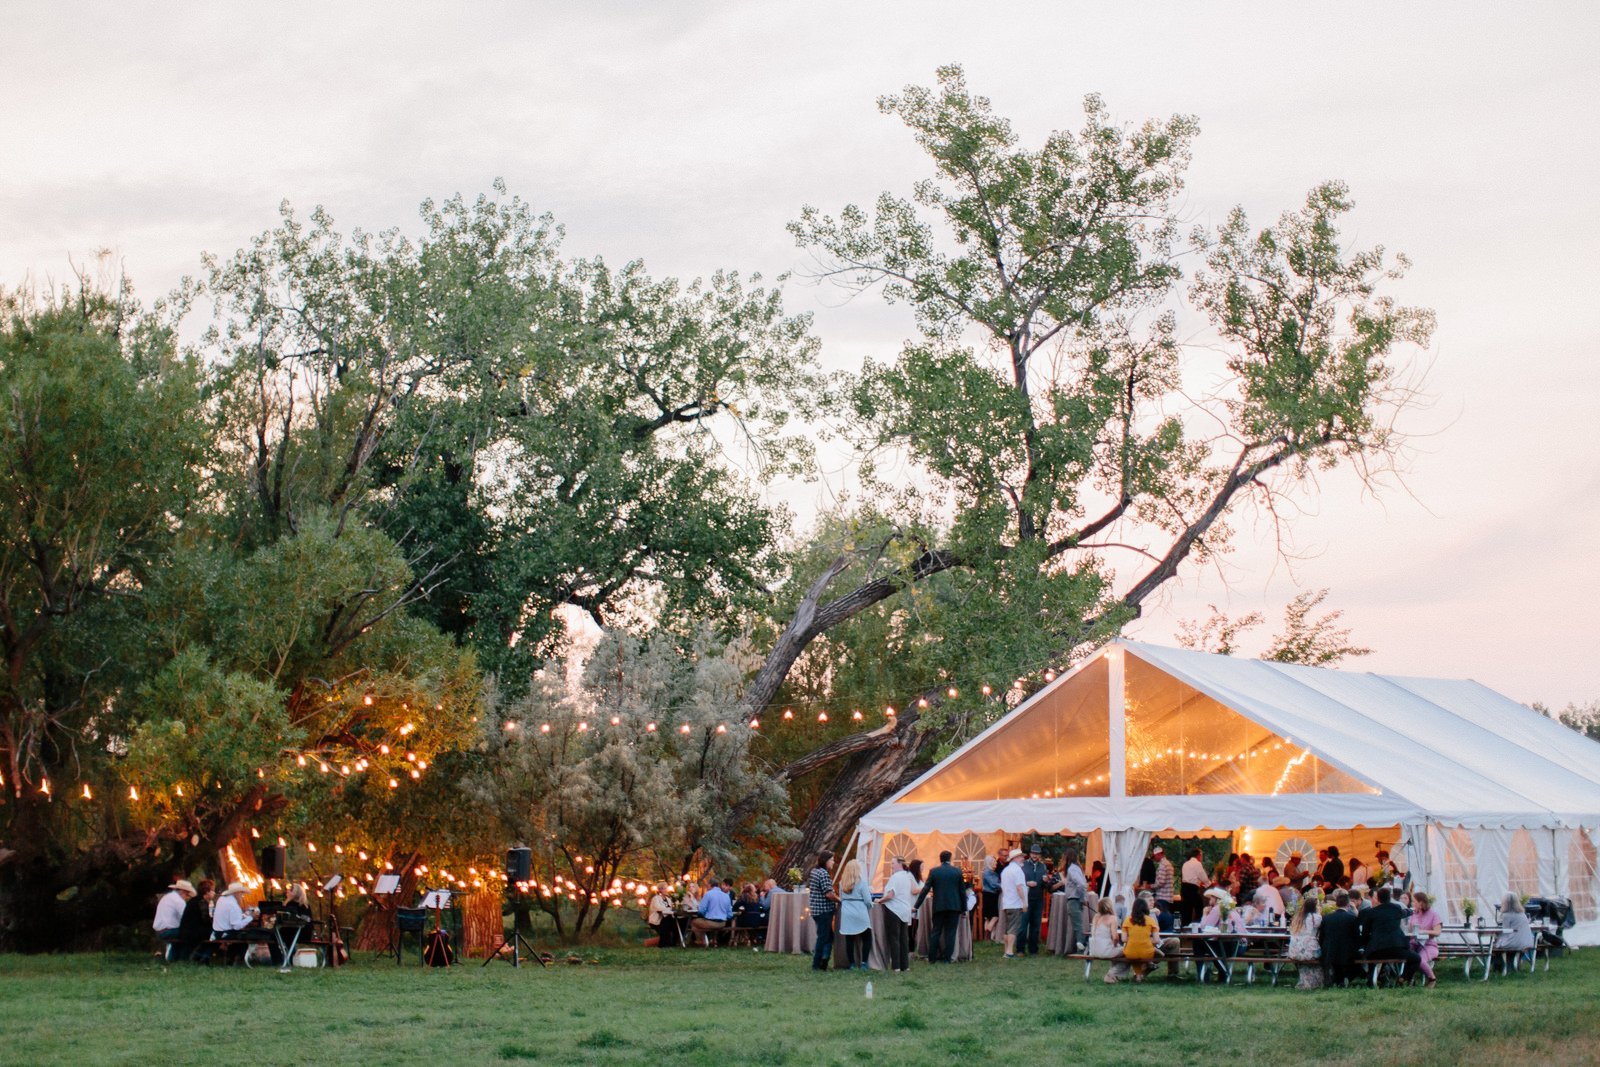 creekside-wedding-beer-tent-reception-sioux-falls-rapid-city-south-dakota-photographer-michael-liedtke064.jpg